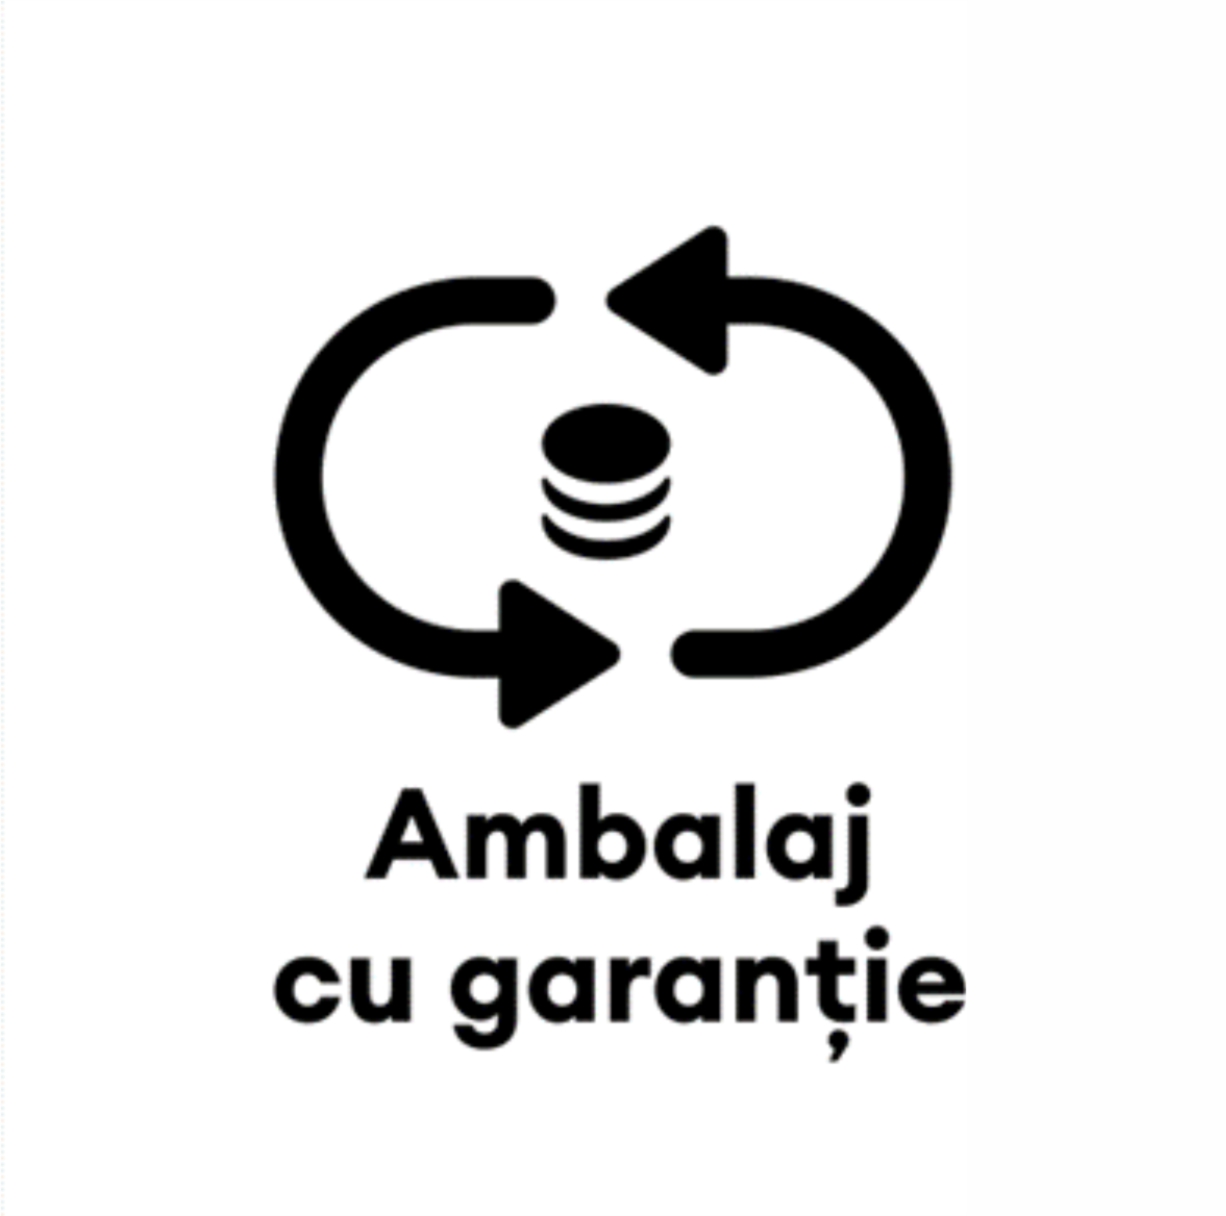 Simbol Ambalaj cu garantie - retuRO